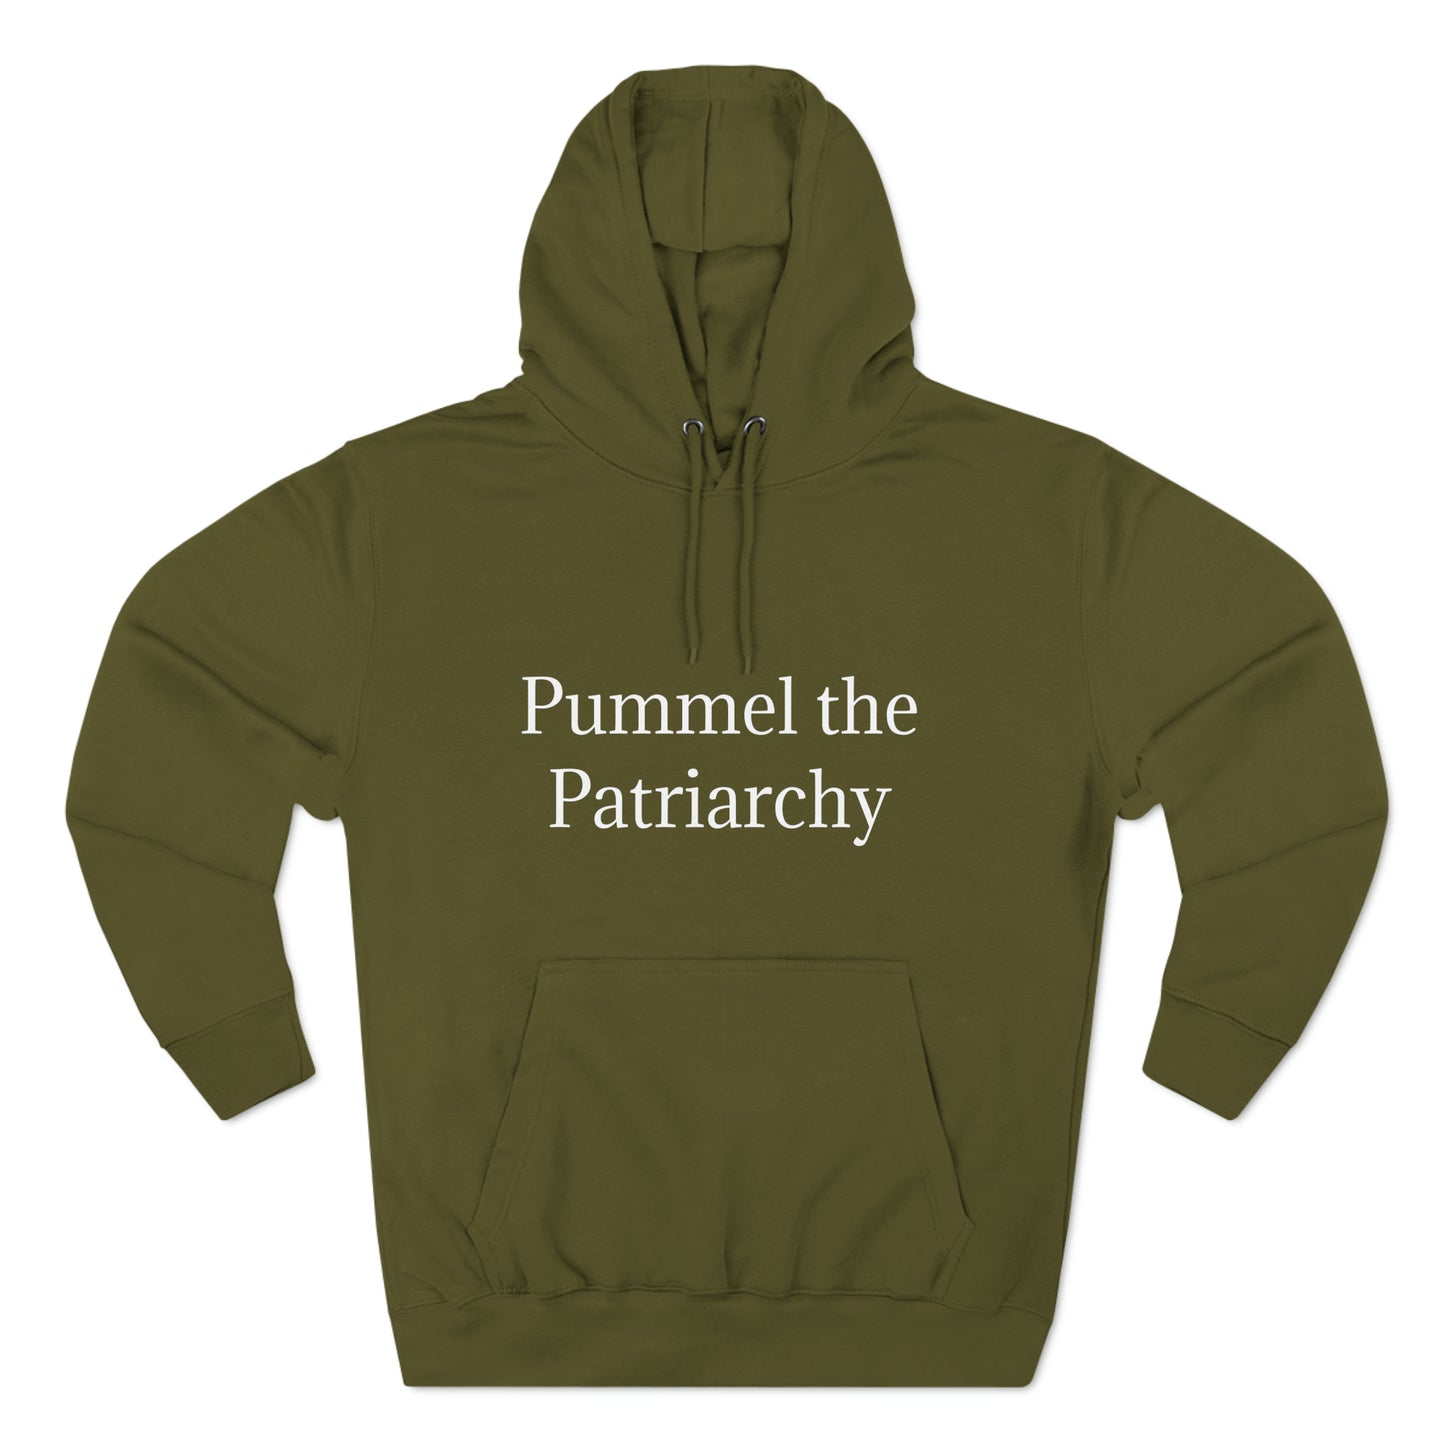 "Pummel the Patriarchy" Hoodie